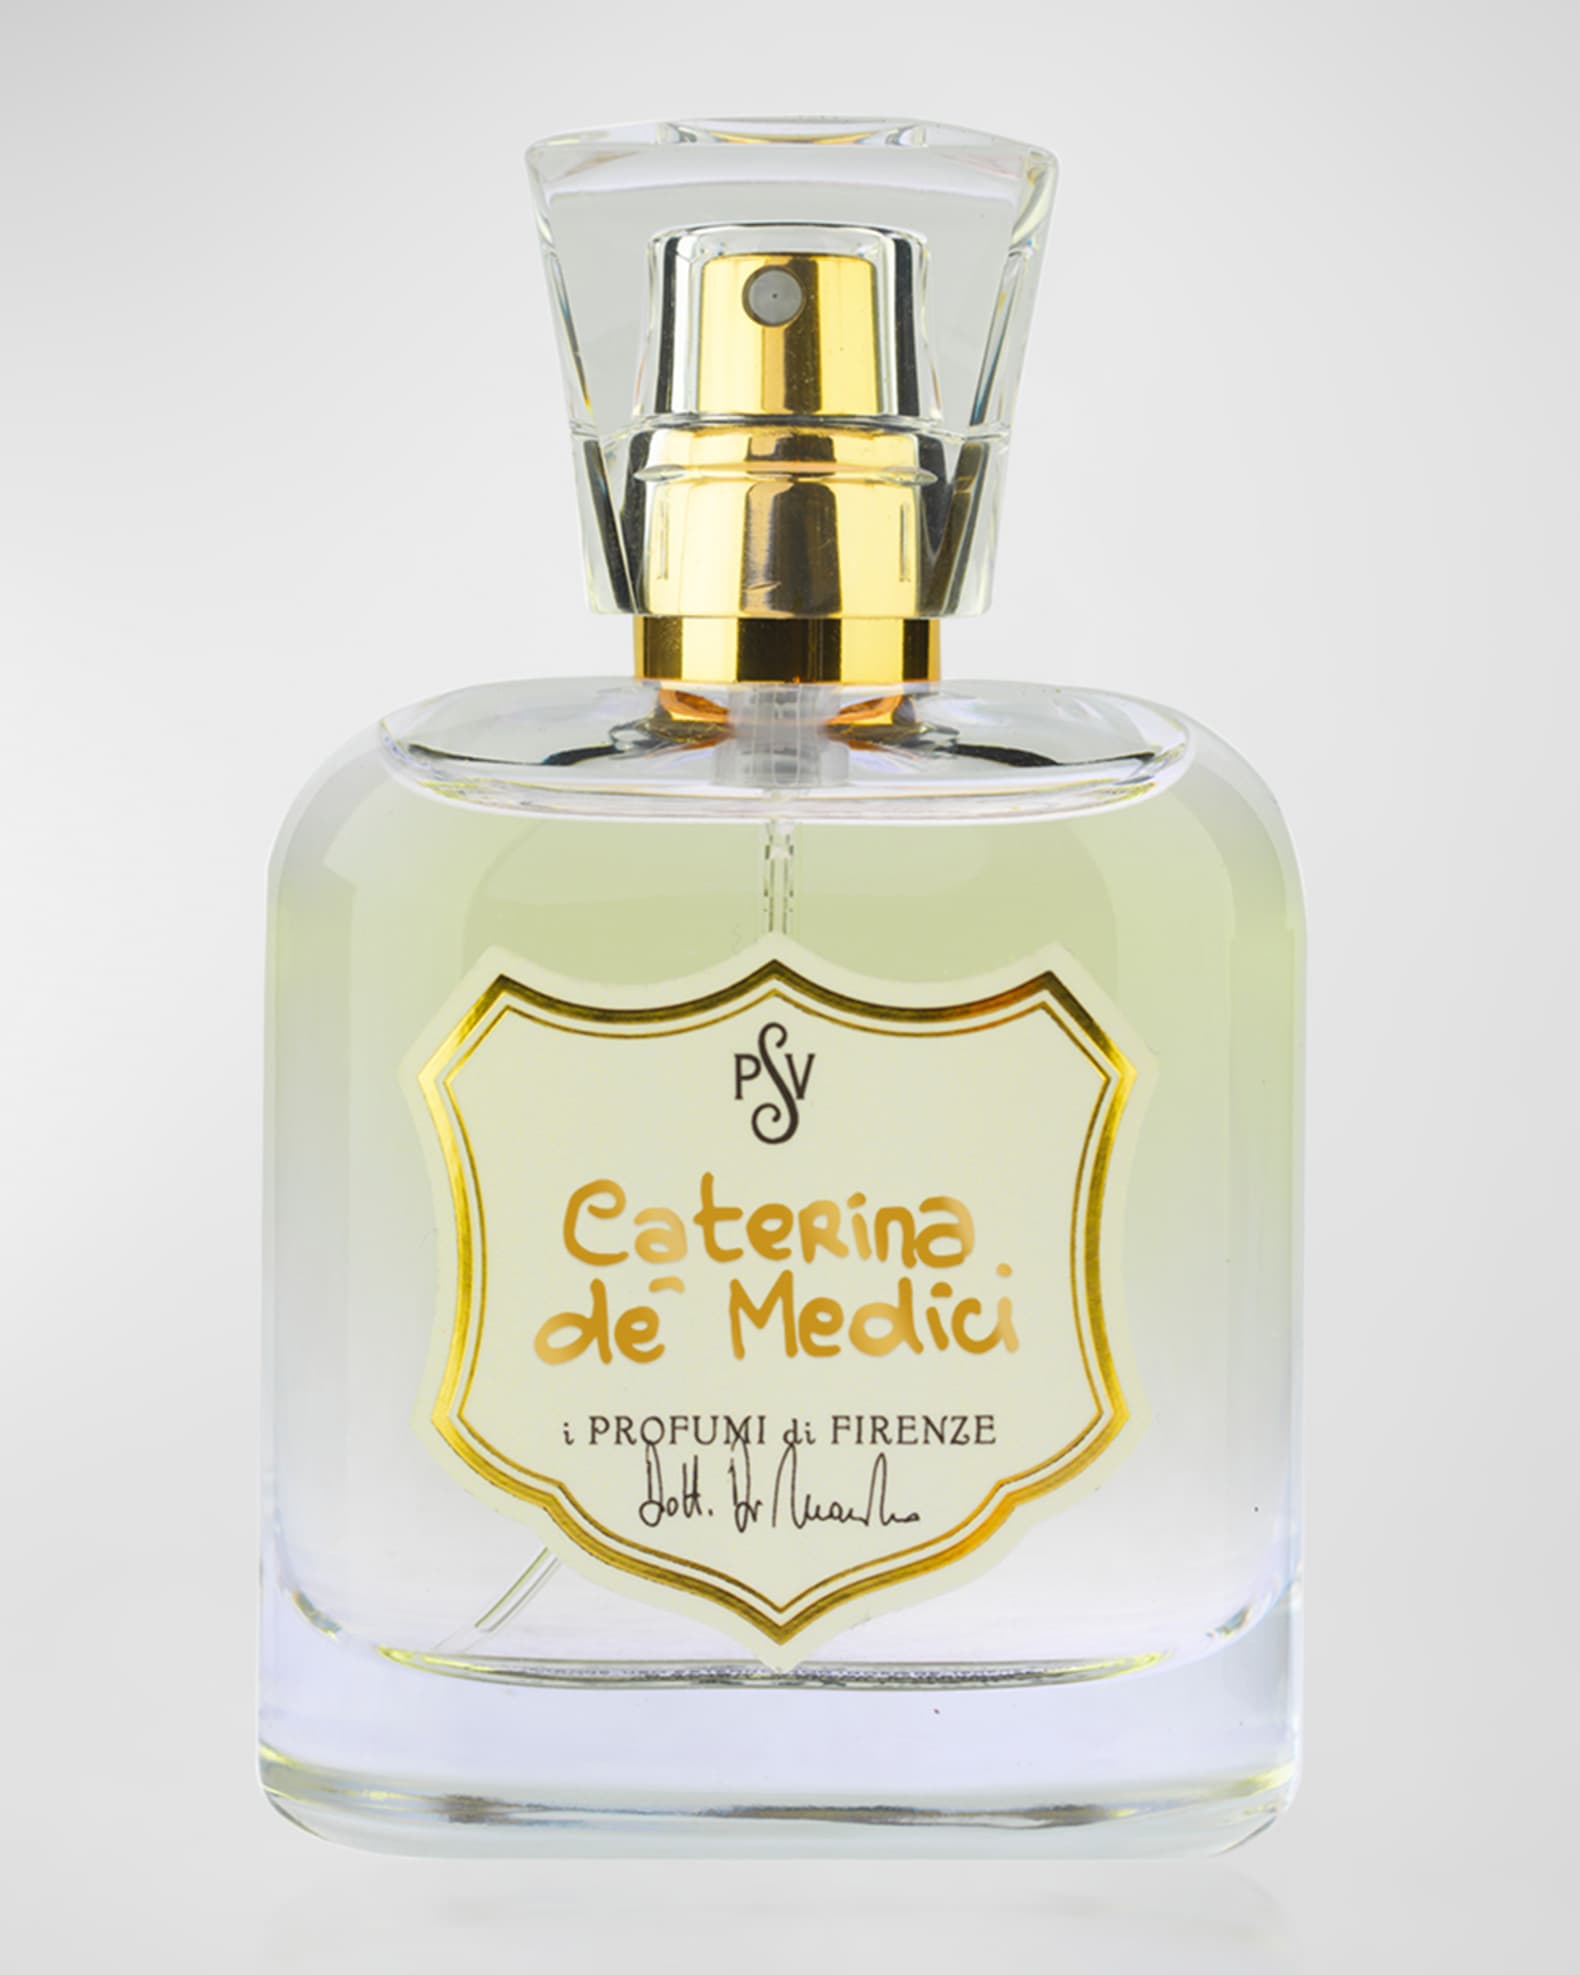 I Profumi di Firenze 1.7 oz. Caterina de Medici Eau de Parfum, Scents & Fragrance Perfumes Eau de Toilette Parfum